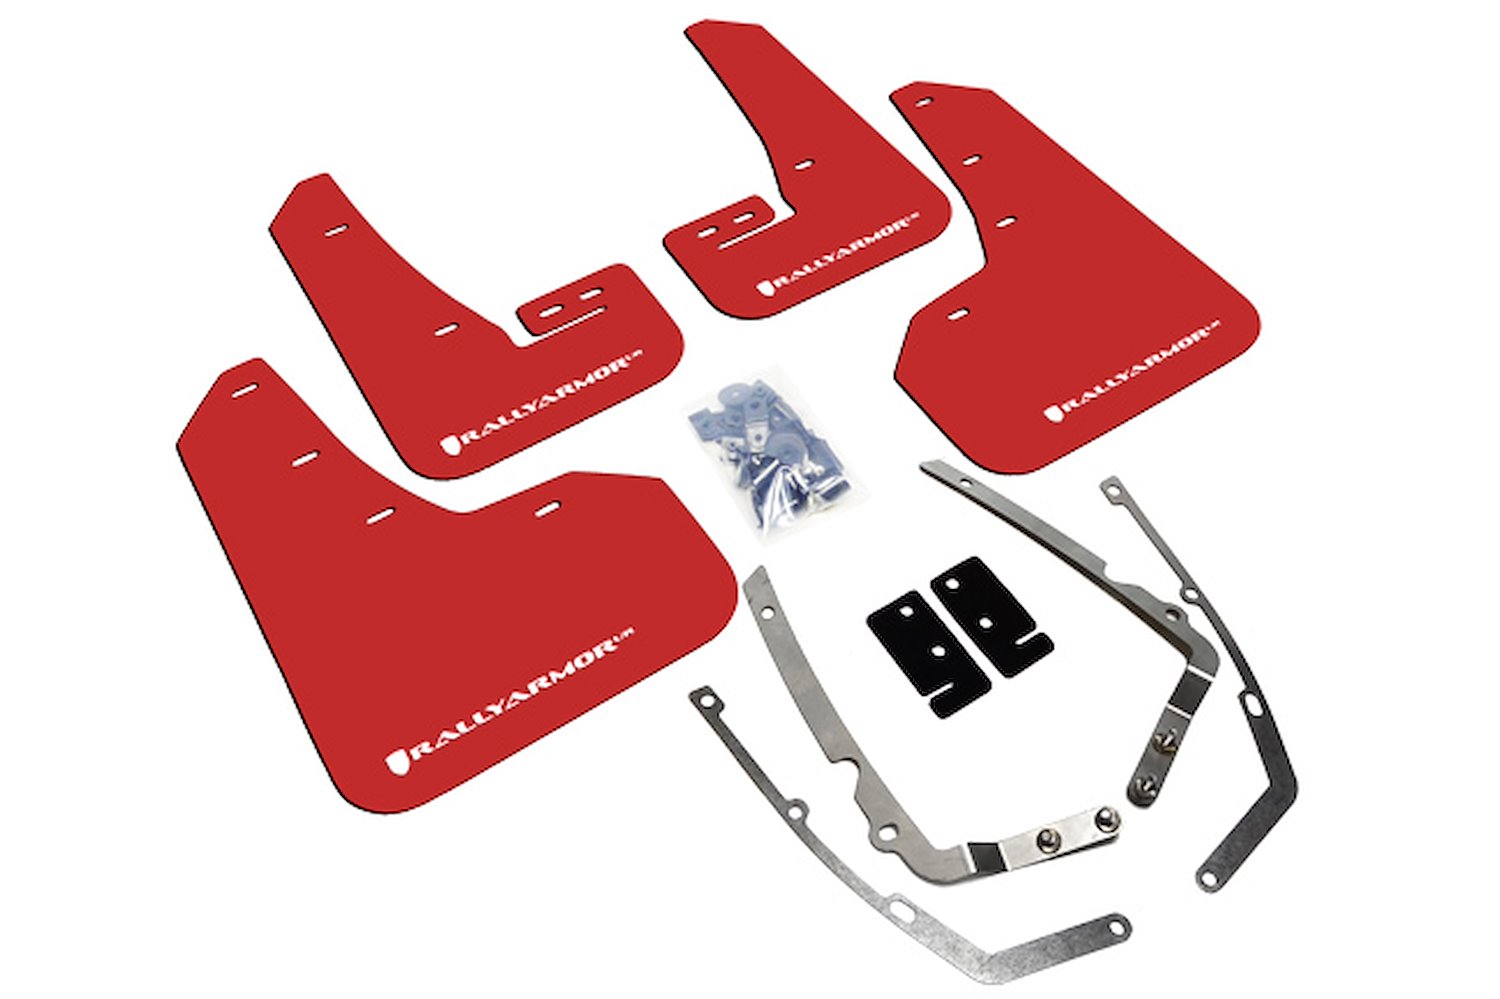 MF37URRDWH Mud Flap Kit for 2015-2019 Volkswagen Golf - Red Mud Flap/White Logo